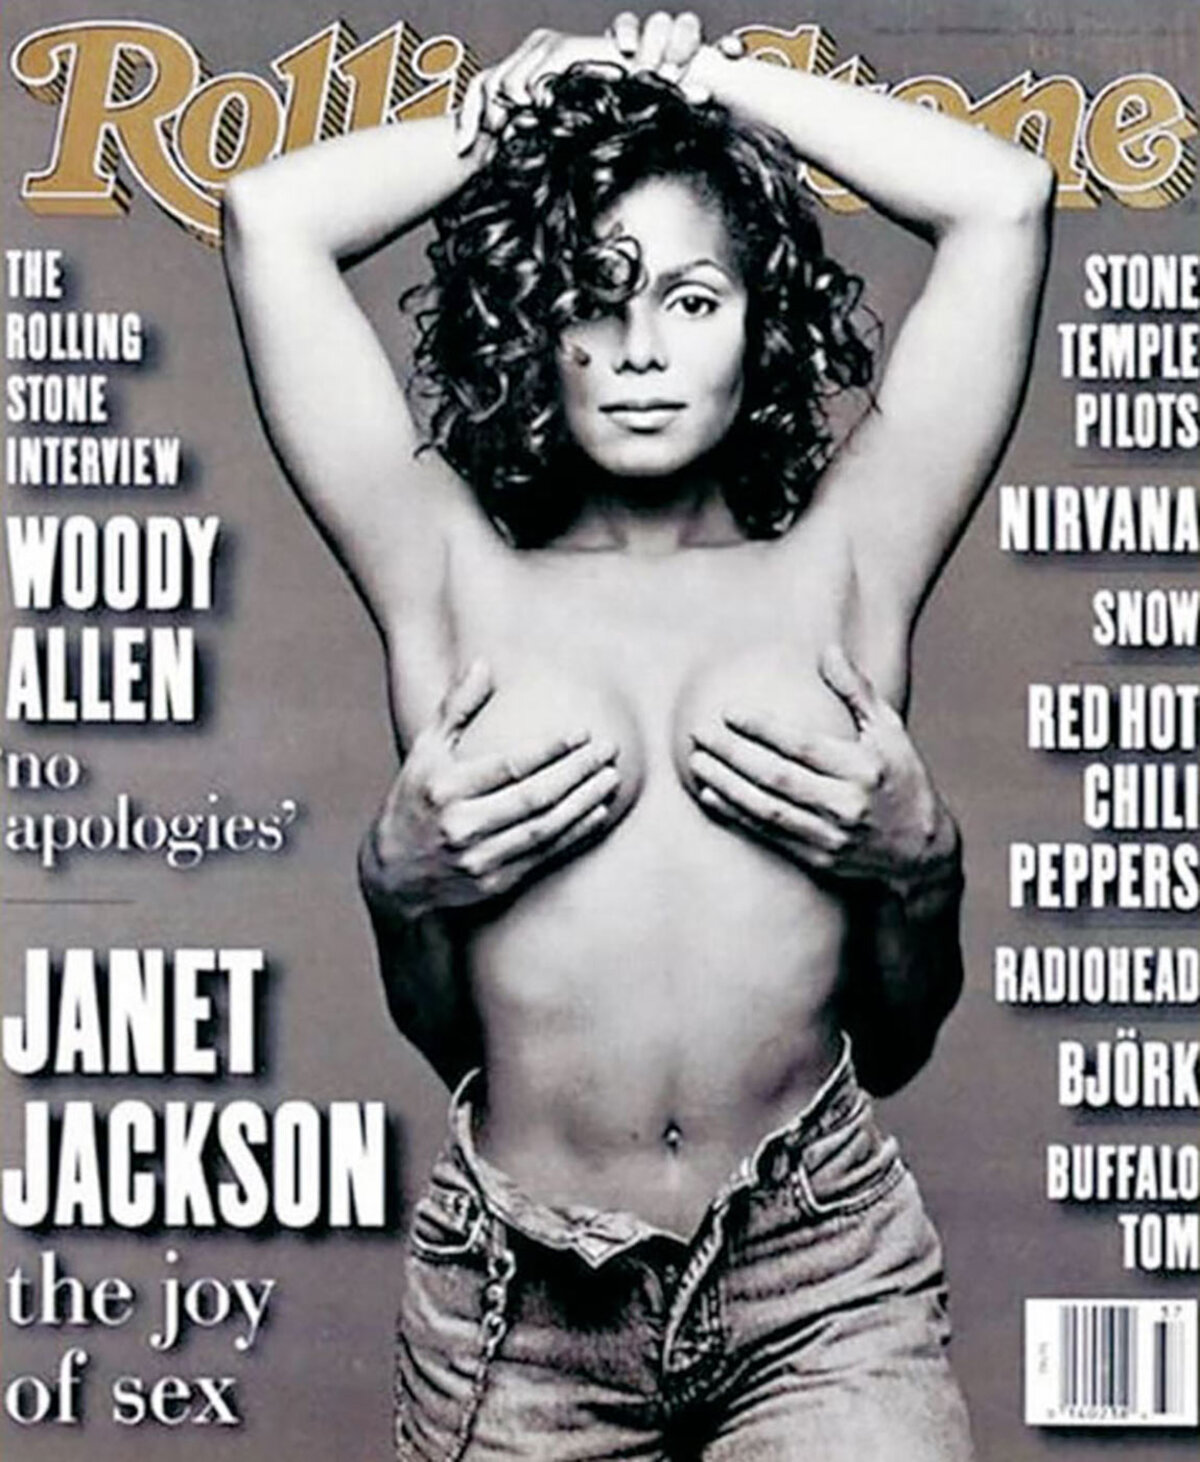 « Nipplegate » : en 2004, la chute de Janet Jackson